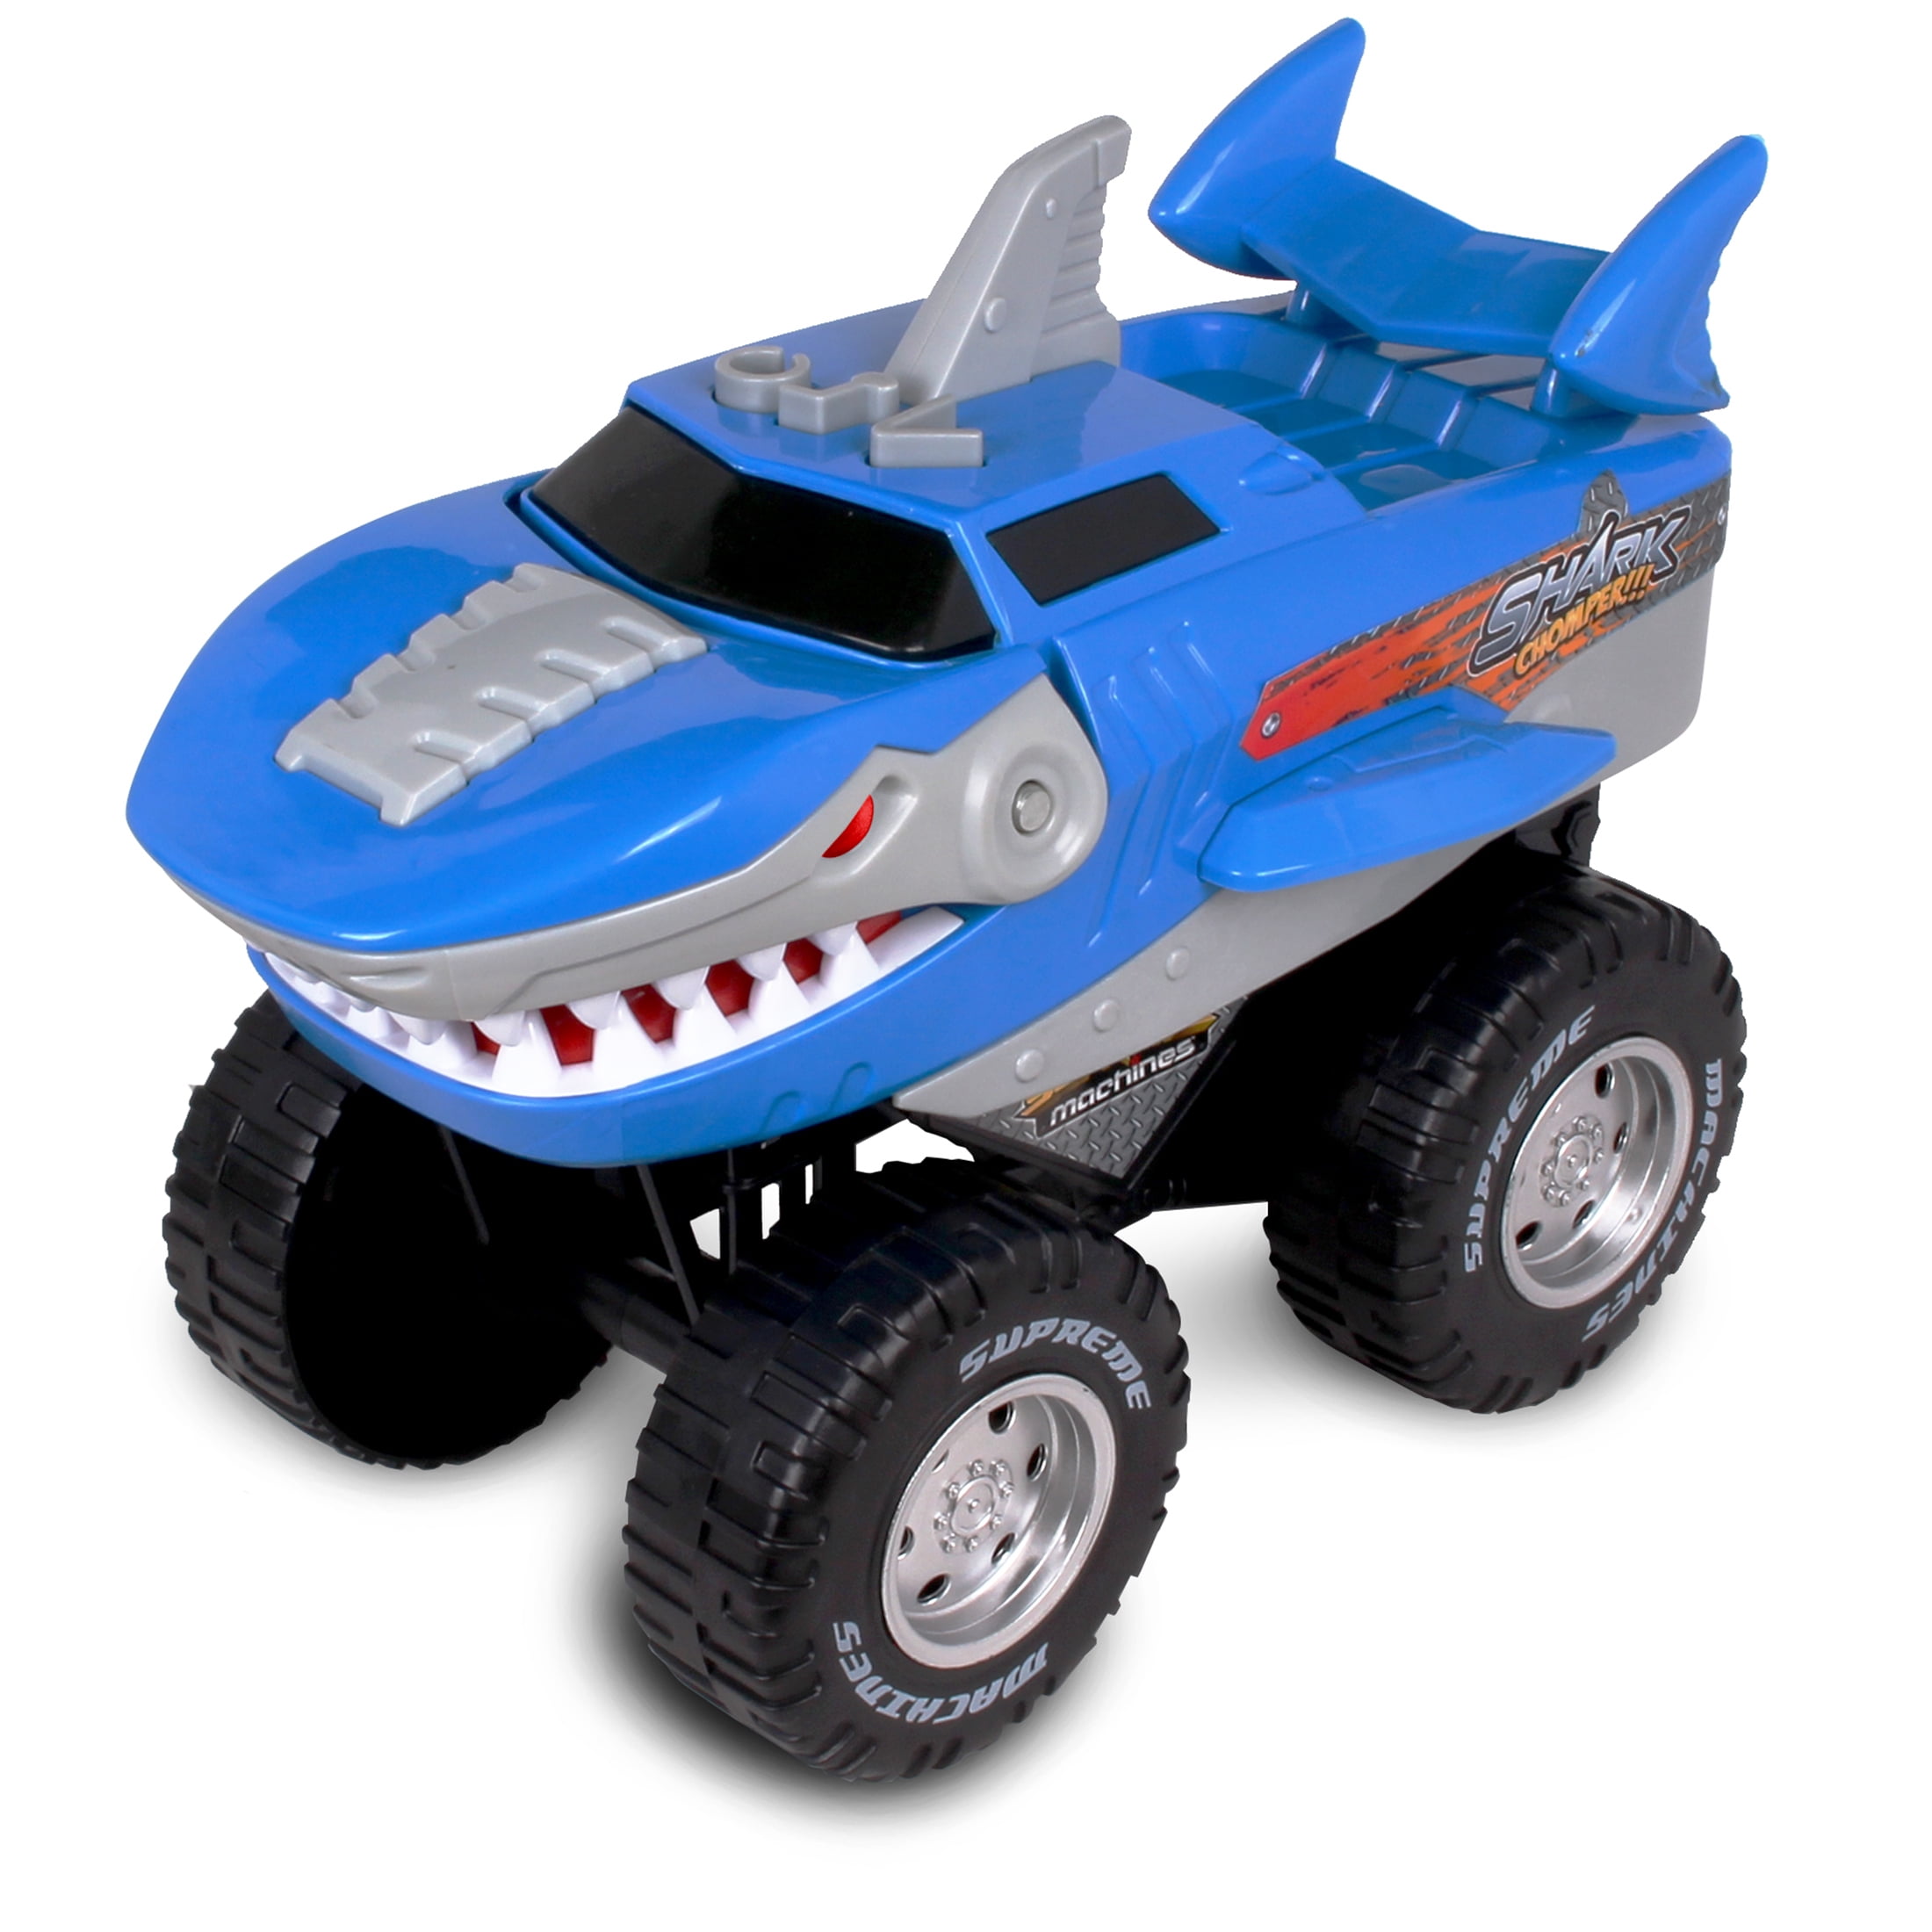 shark chomper toy